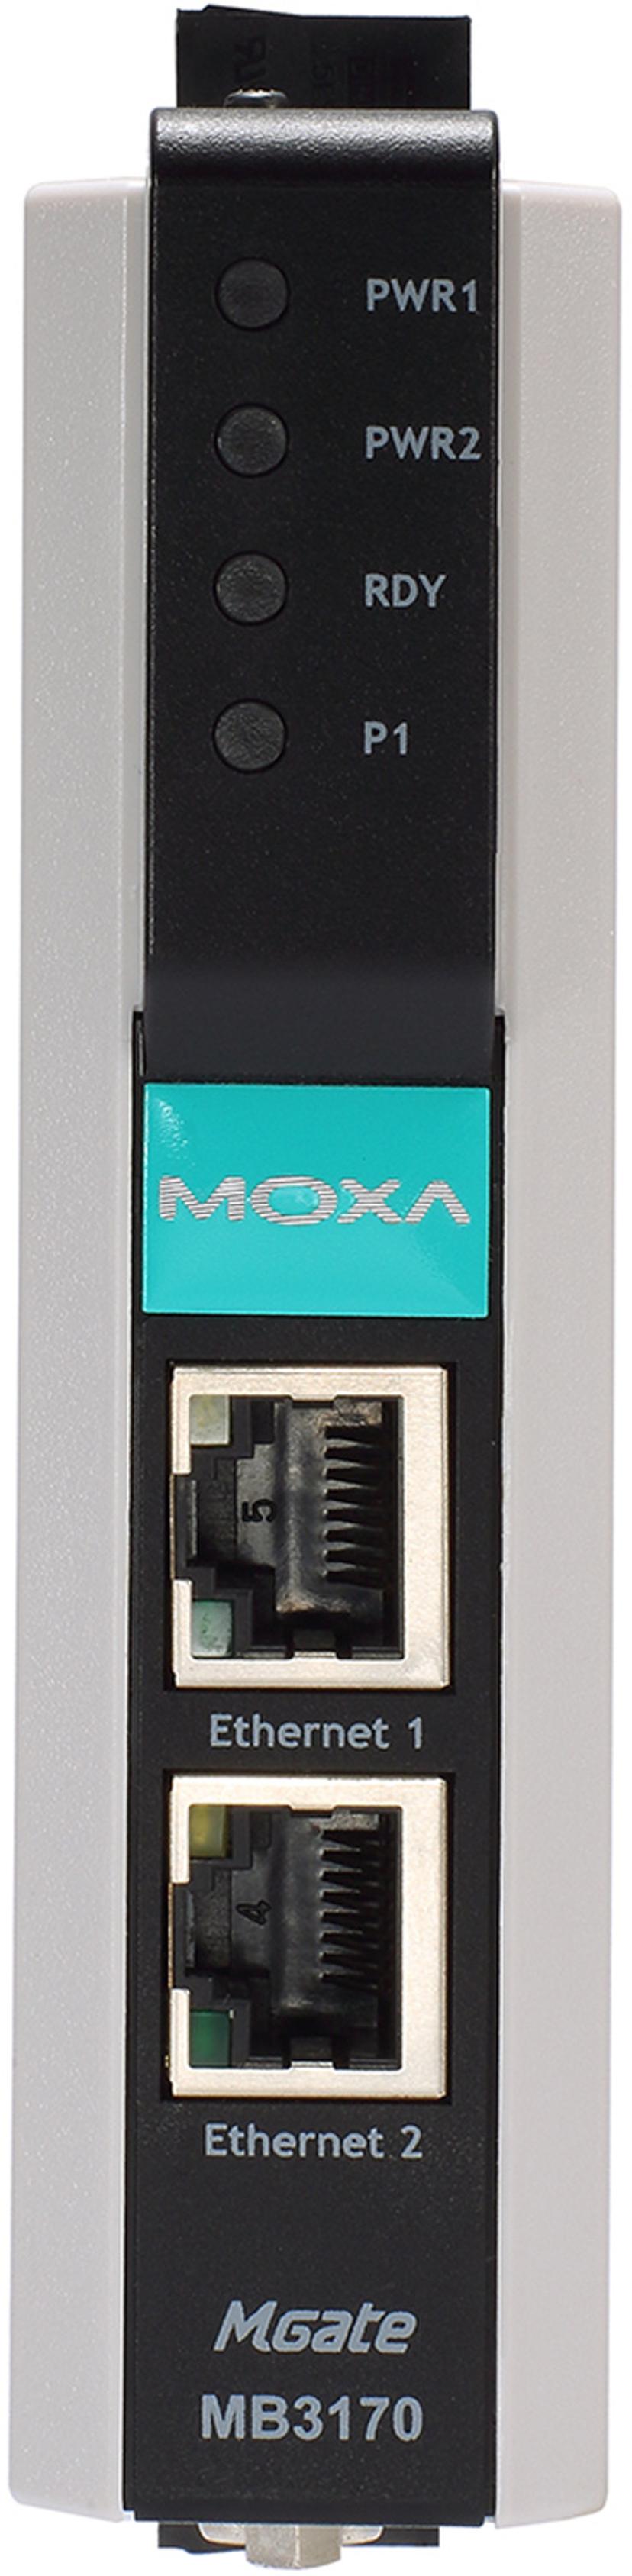 Moxa MB3170 Serial-To-Ethernet Modbus Gateway